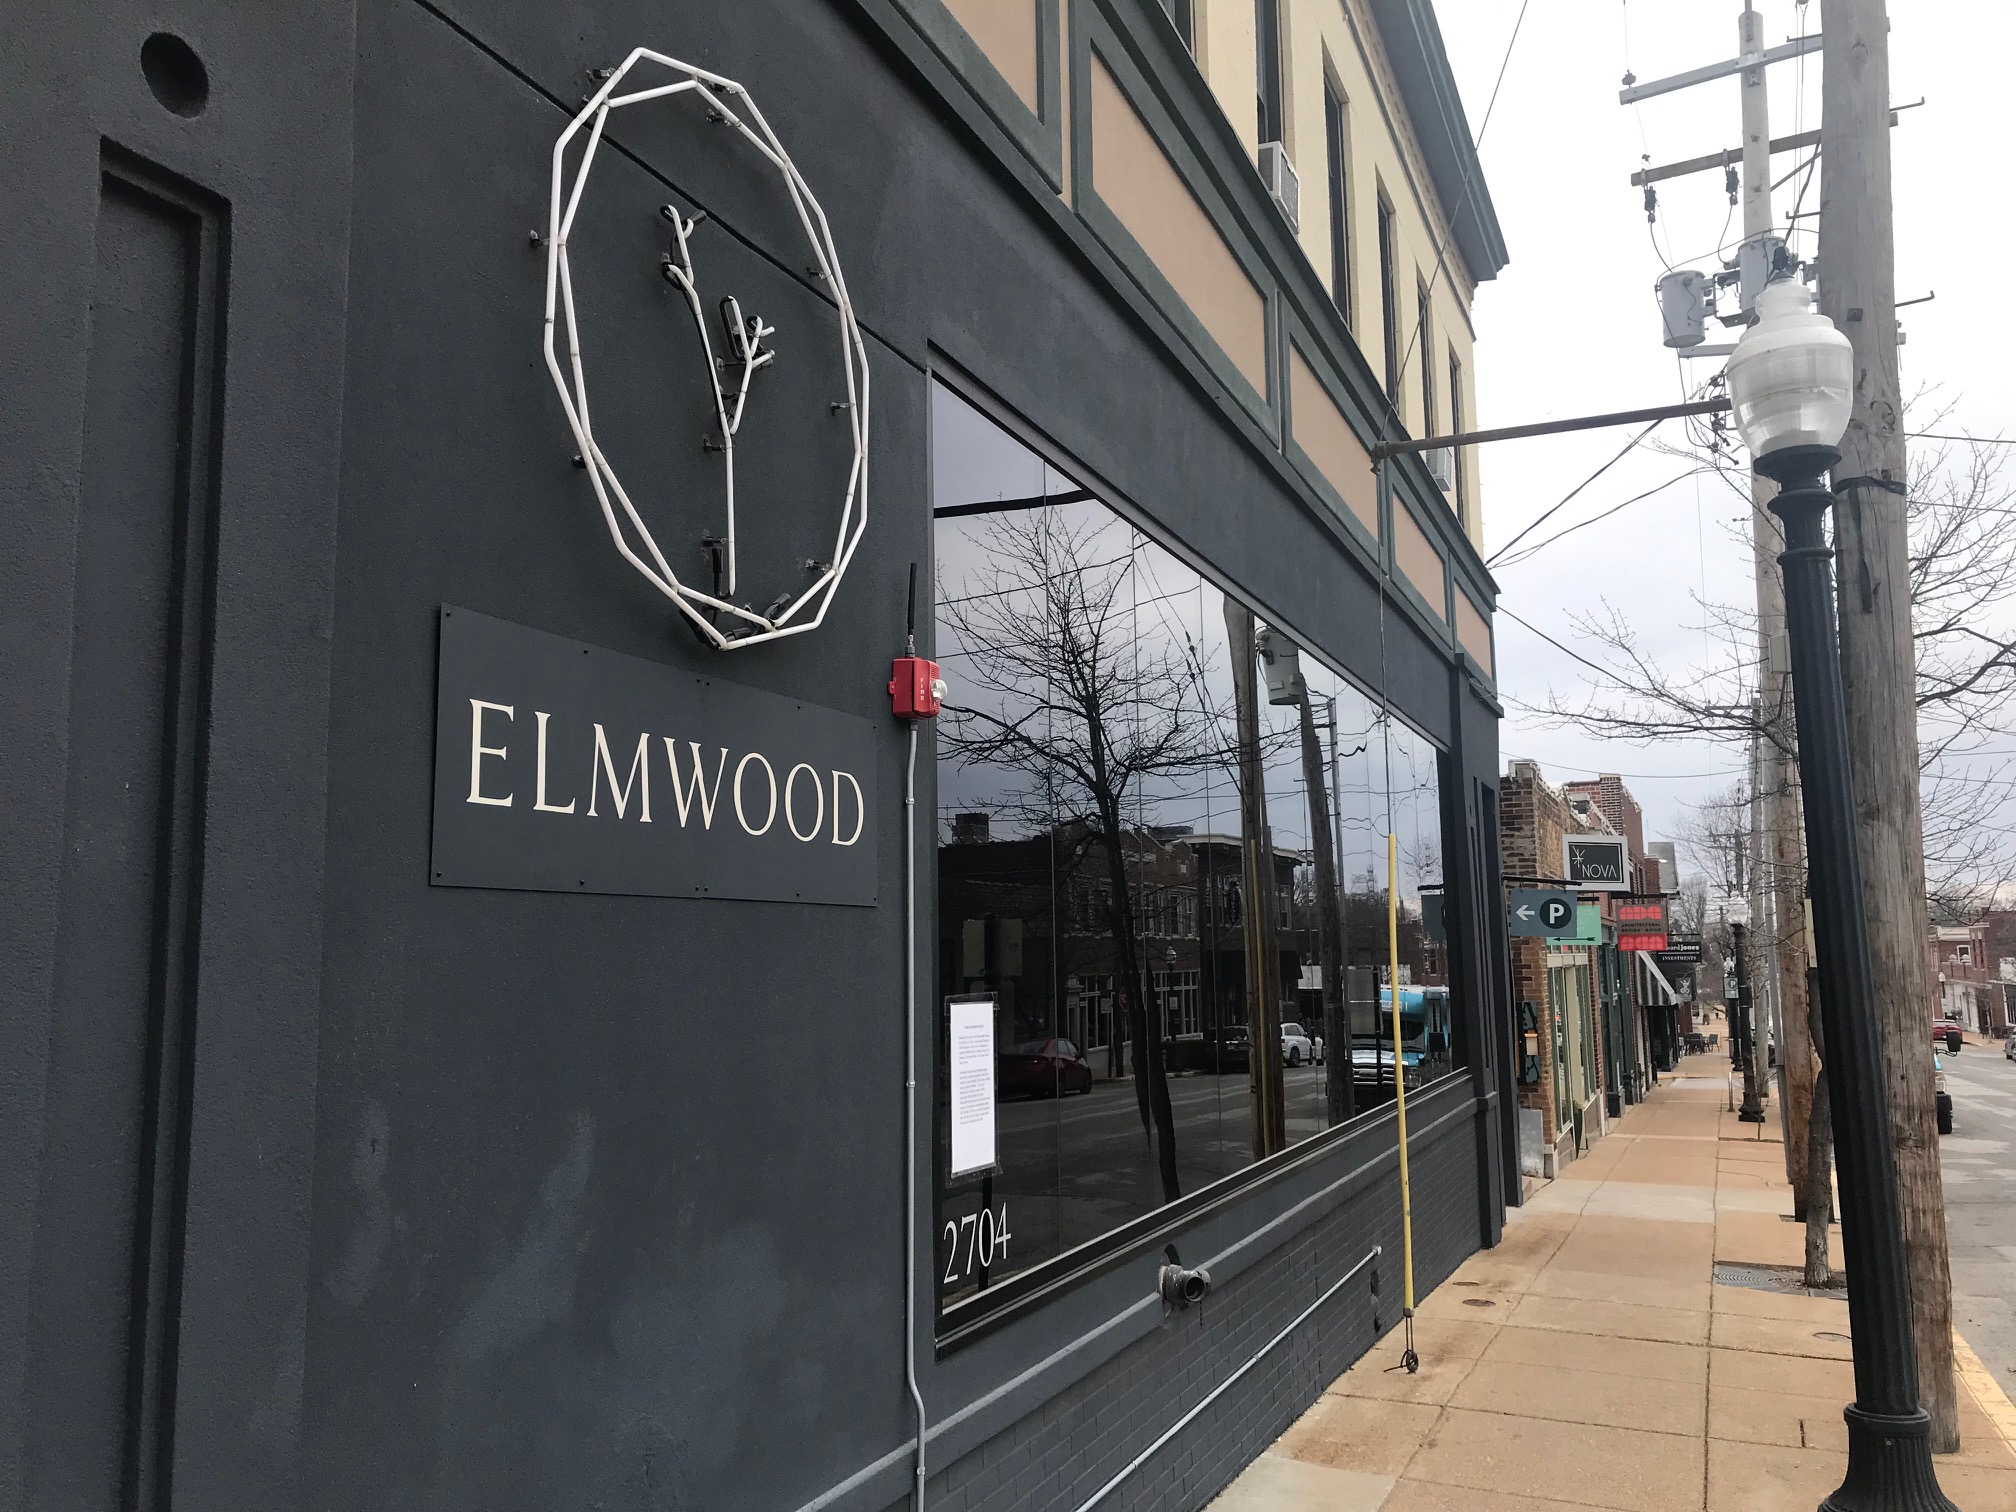 Elmwood location pivoting to burgers, according to notice